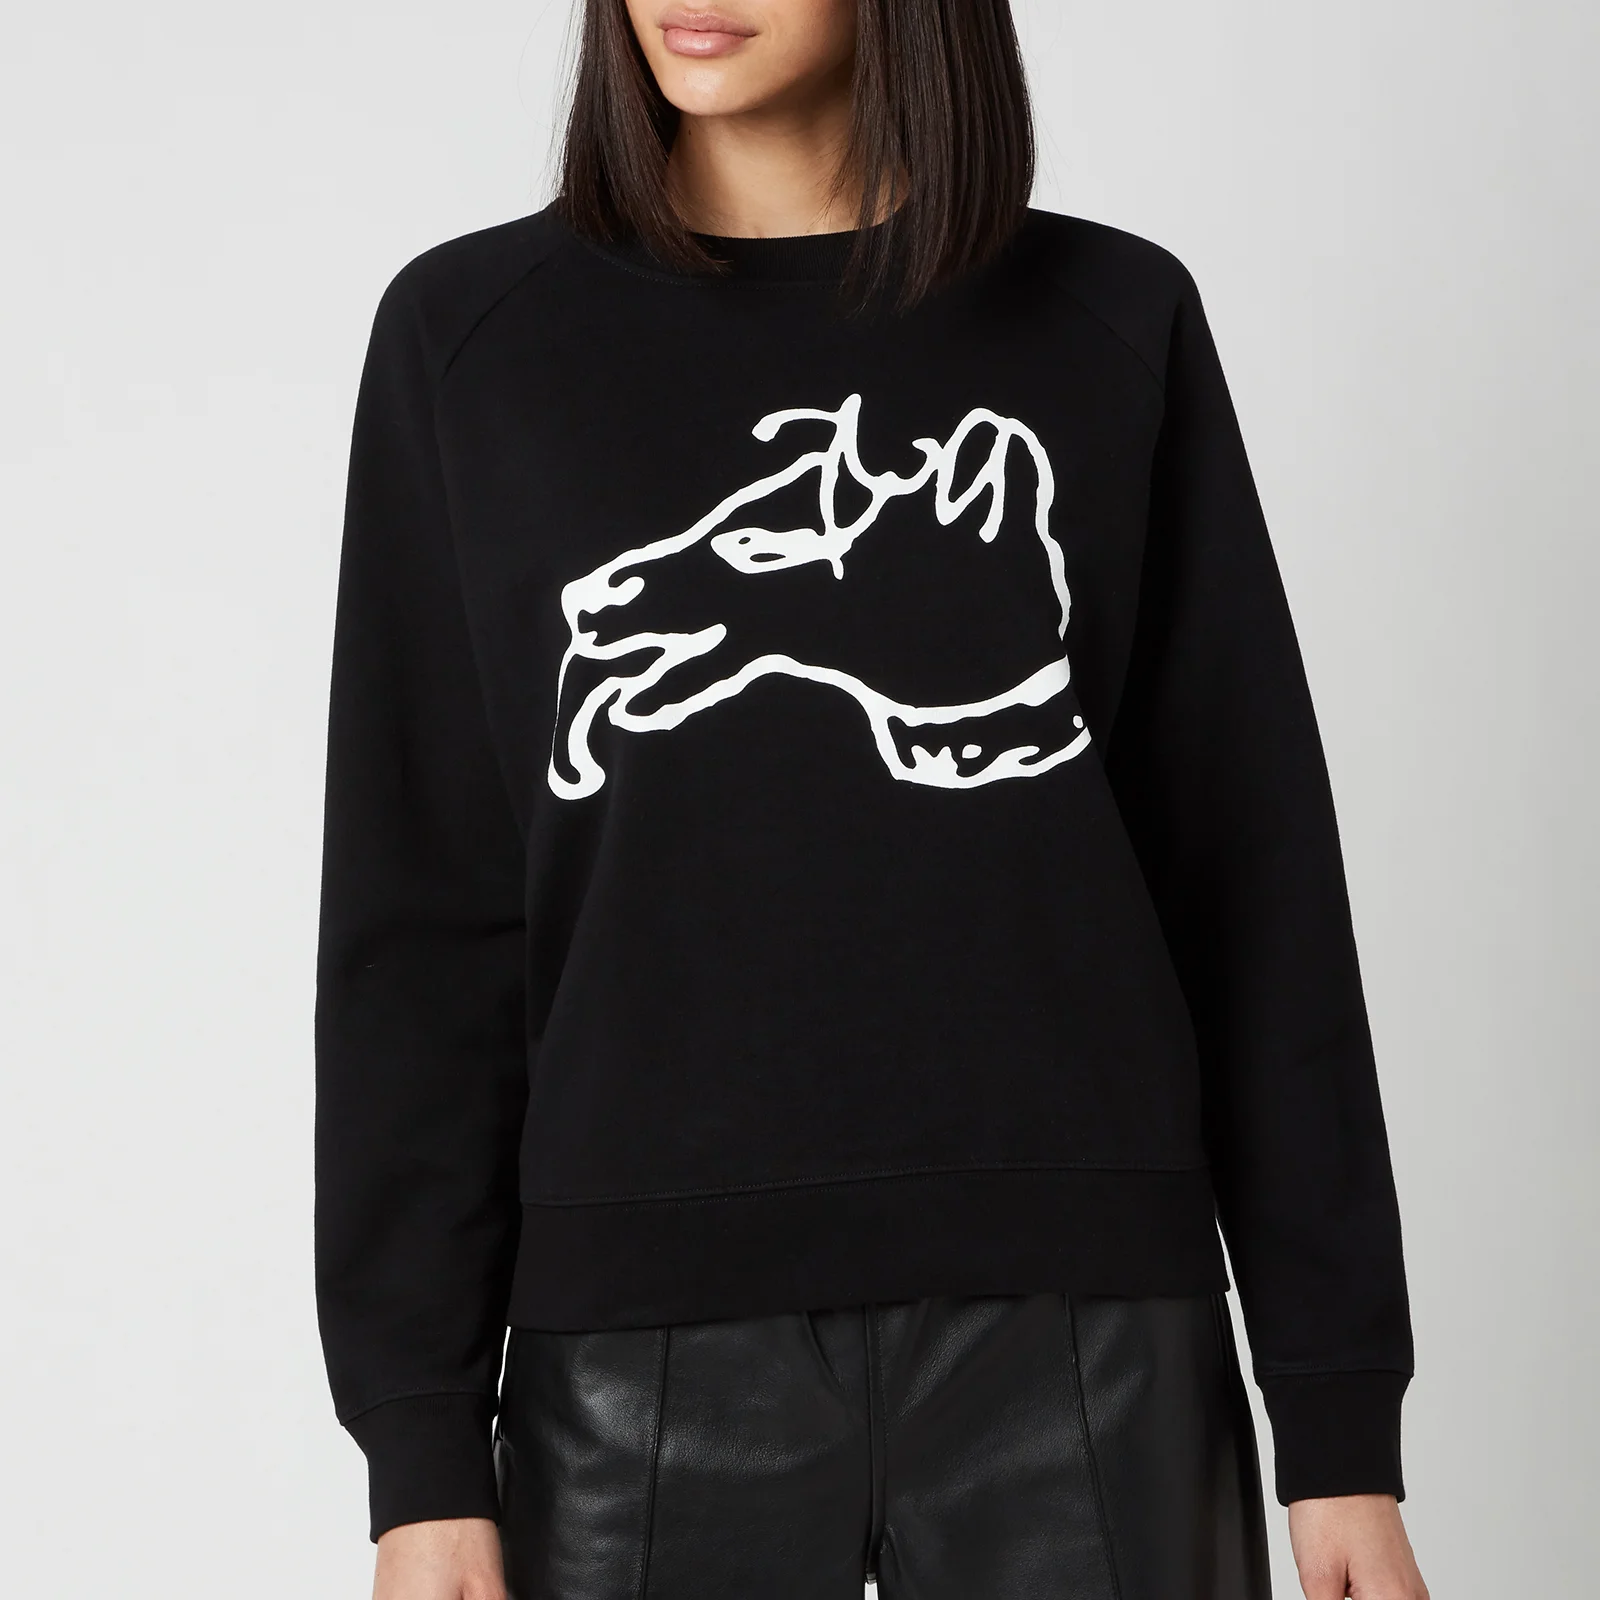 Bella Freud Women's Big Dog Sweatshirt - Black Image 1